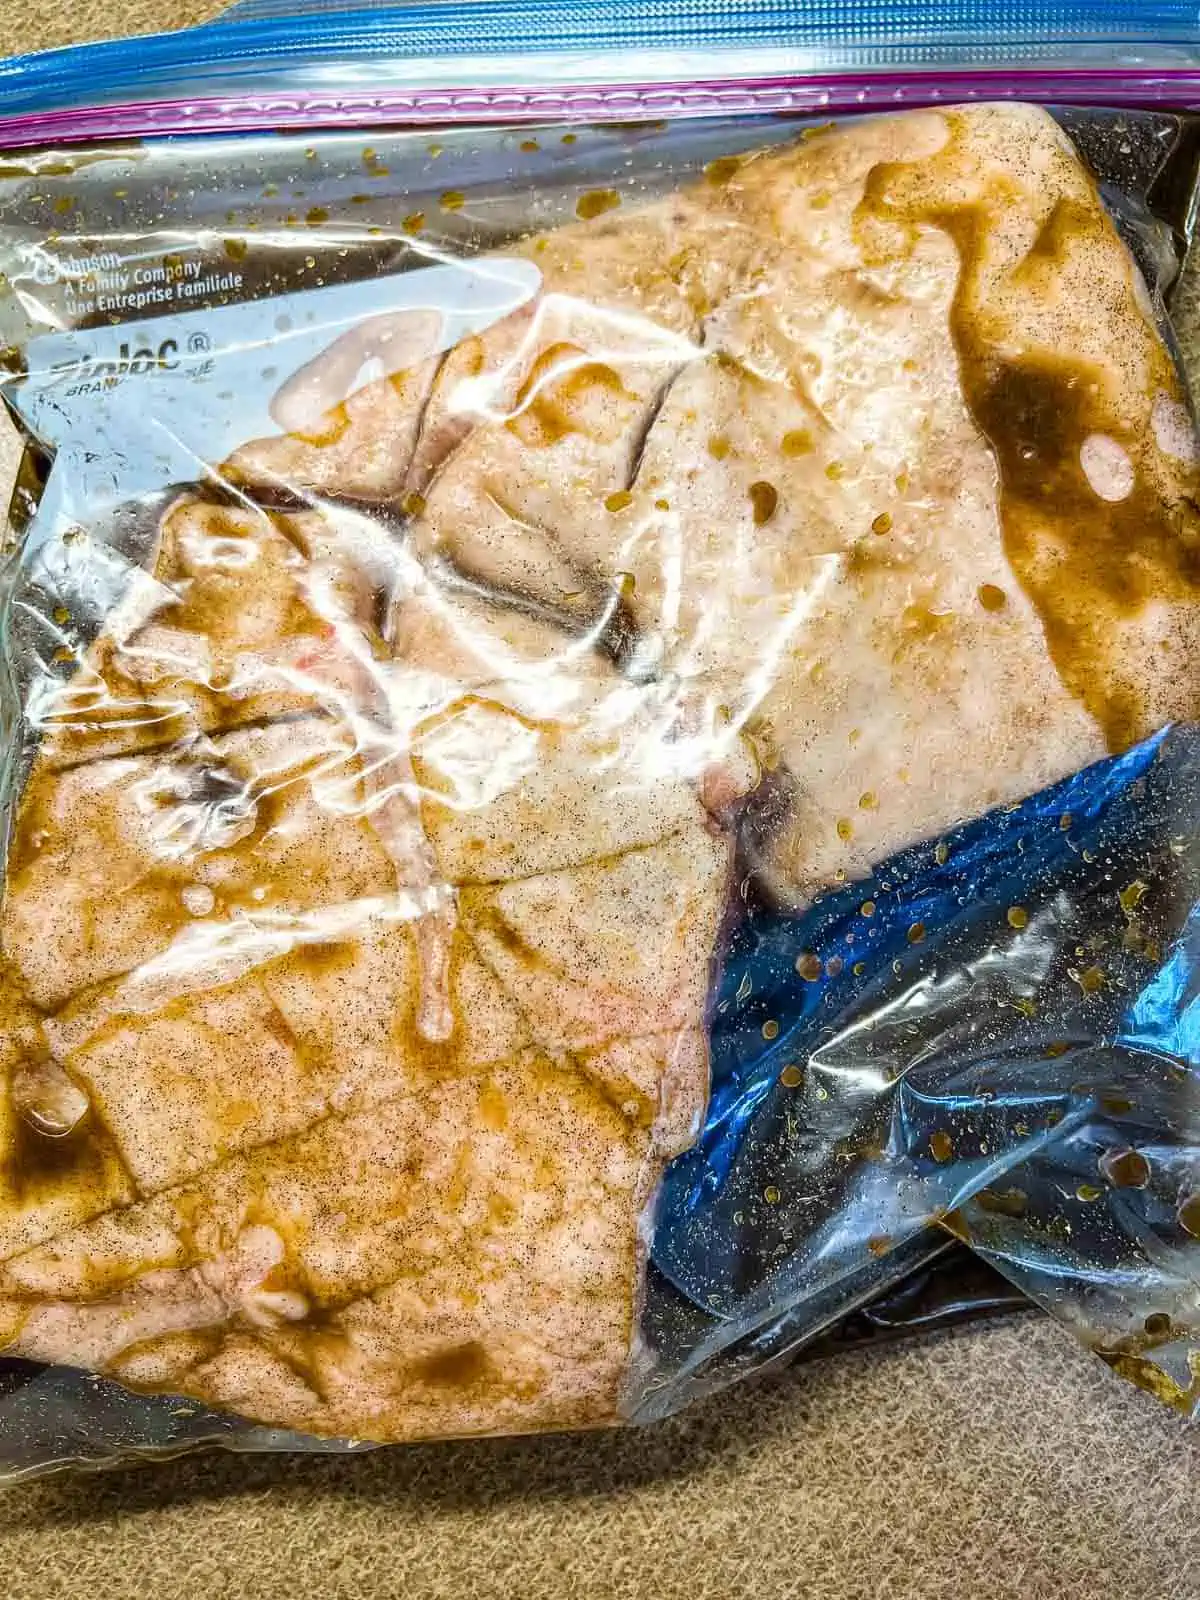 Pork belly in the brine inside a plastic bag.